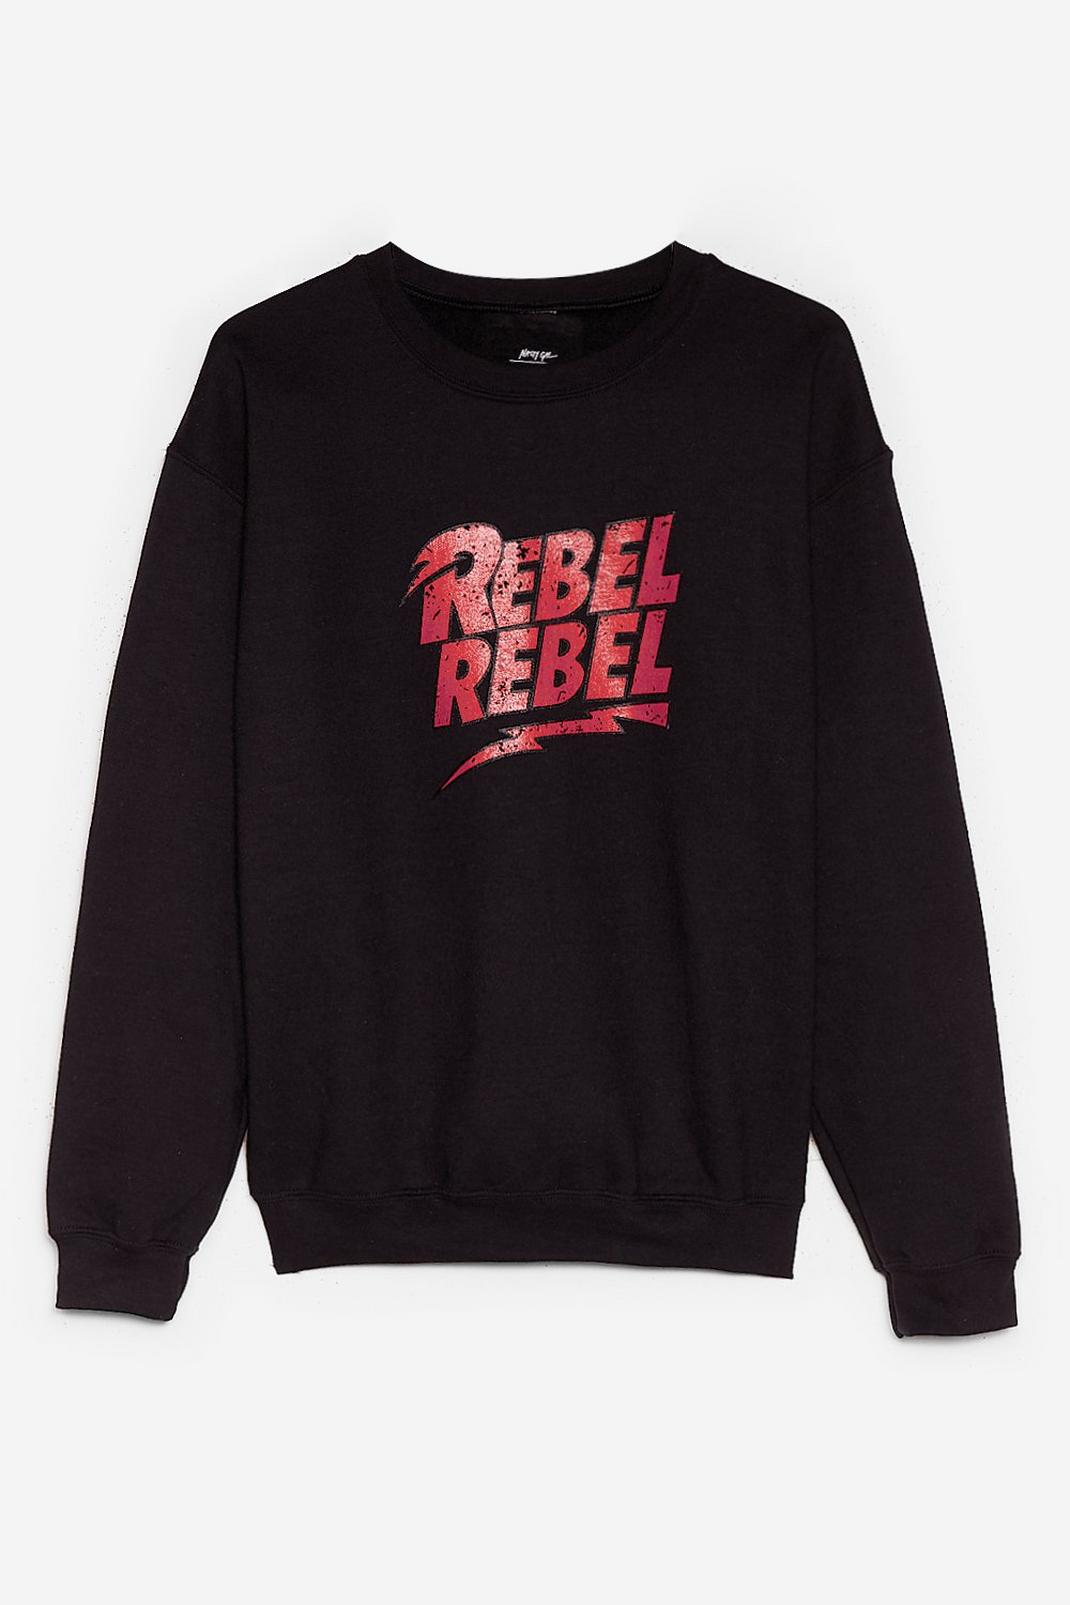 Black Rebel Rebel Graphic Sweatshirt image number 1